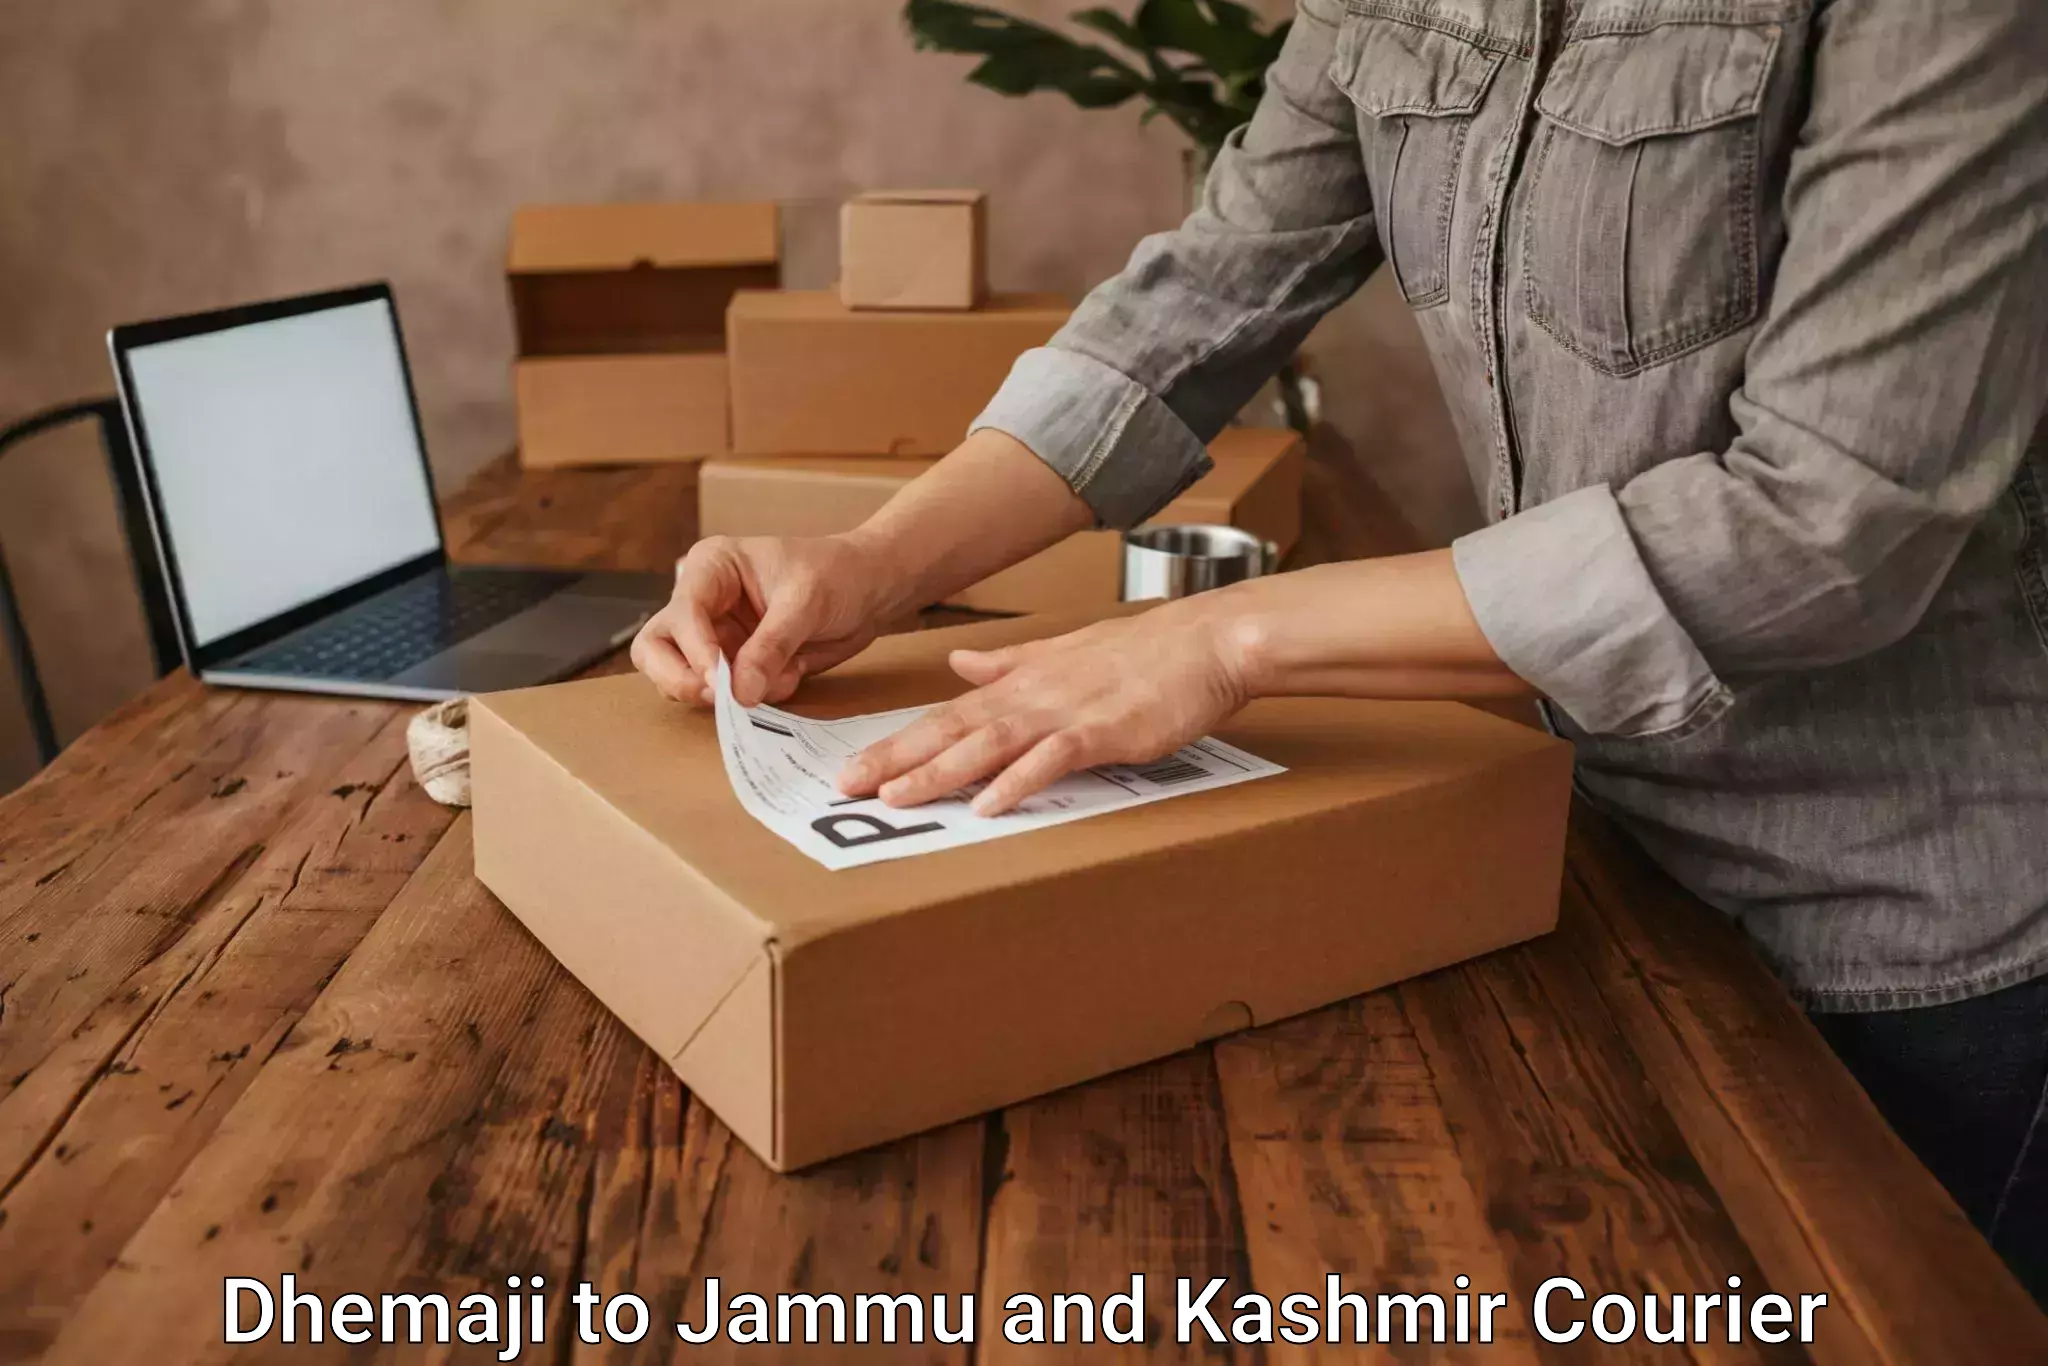 Shipping and handling Dhemaji to Srinagar Kashmir